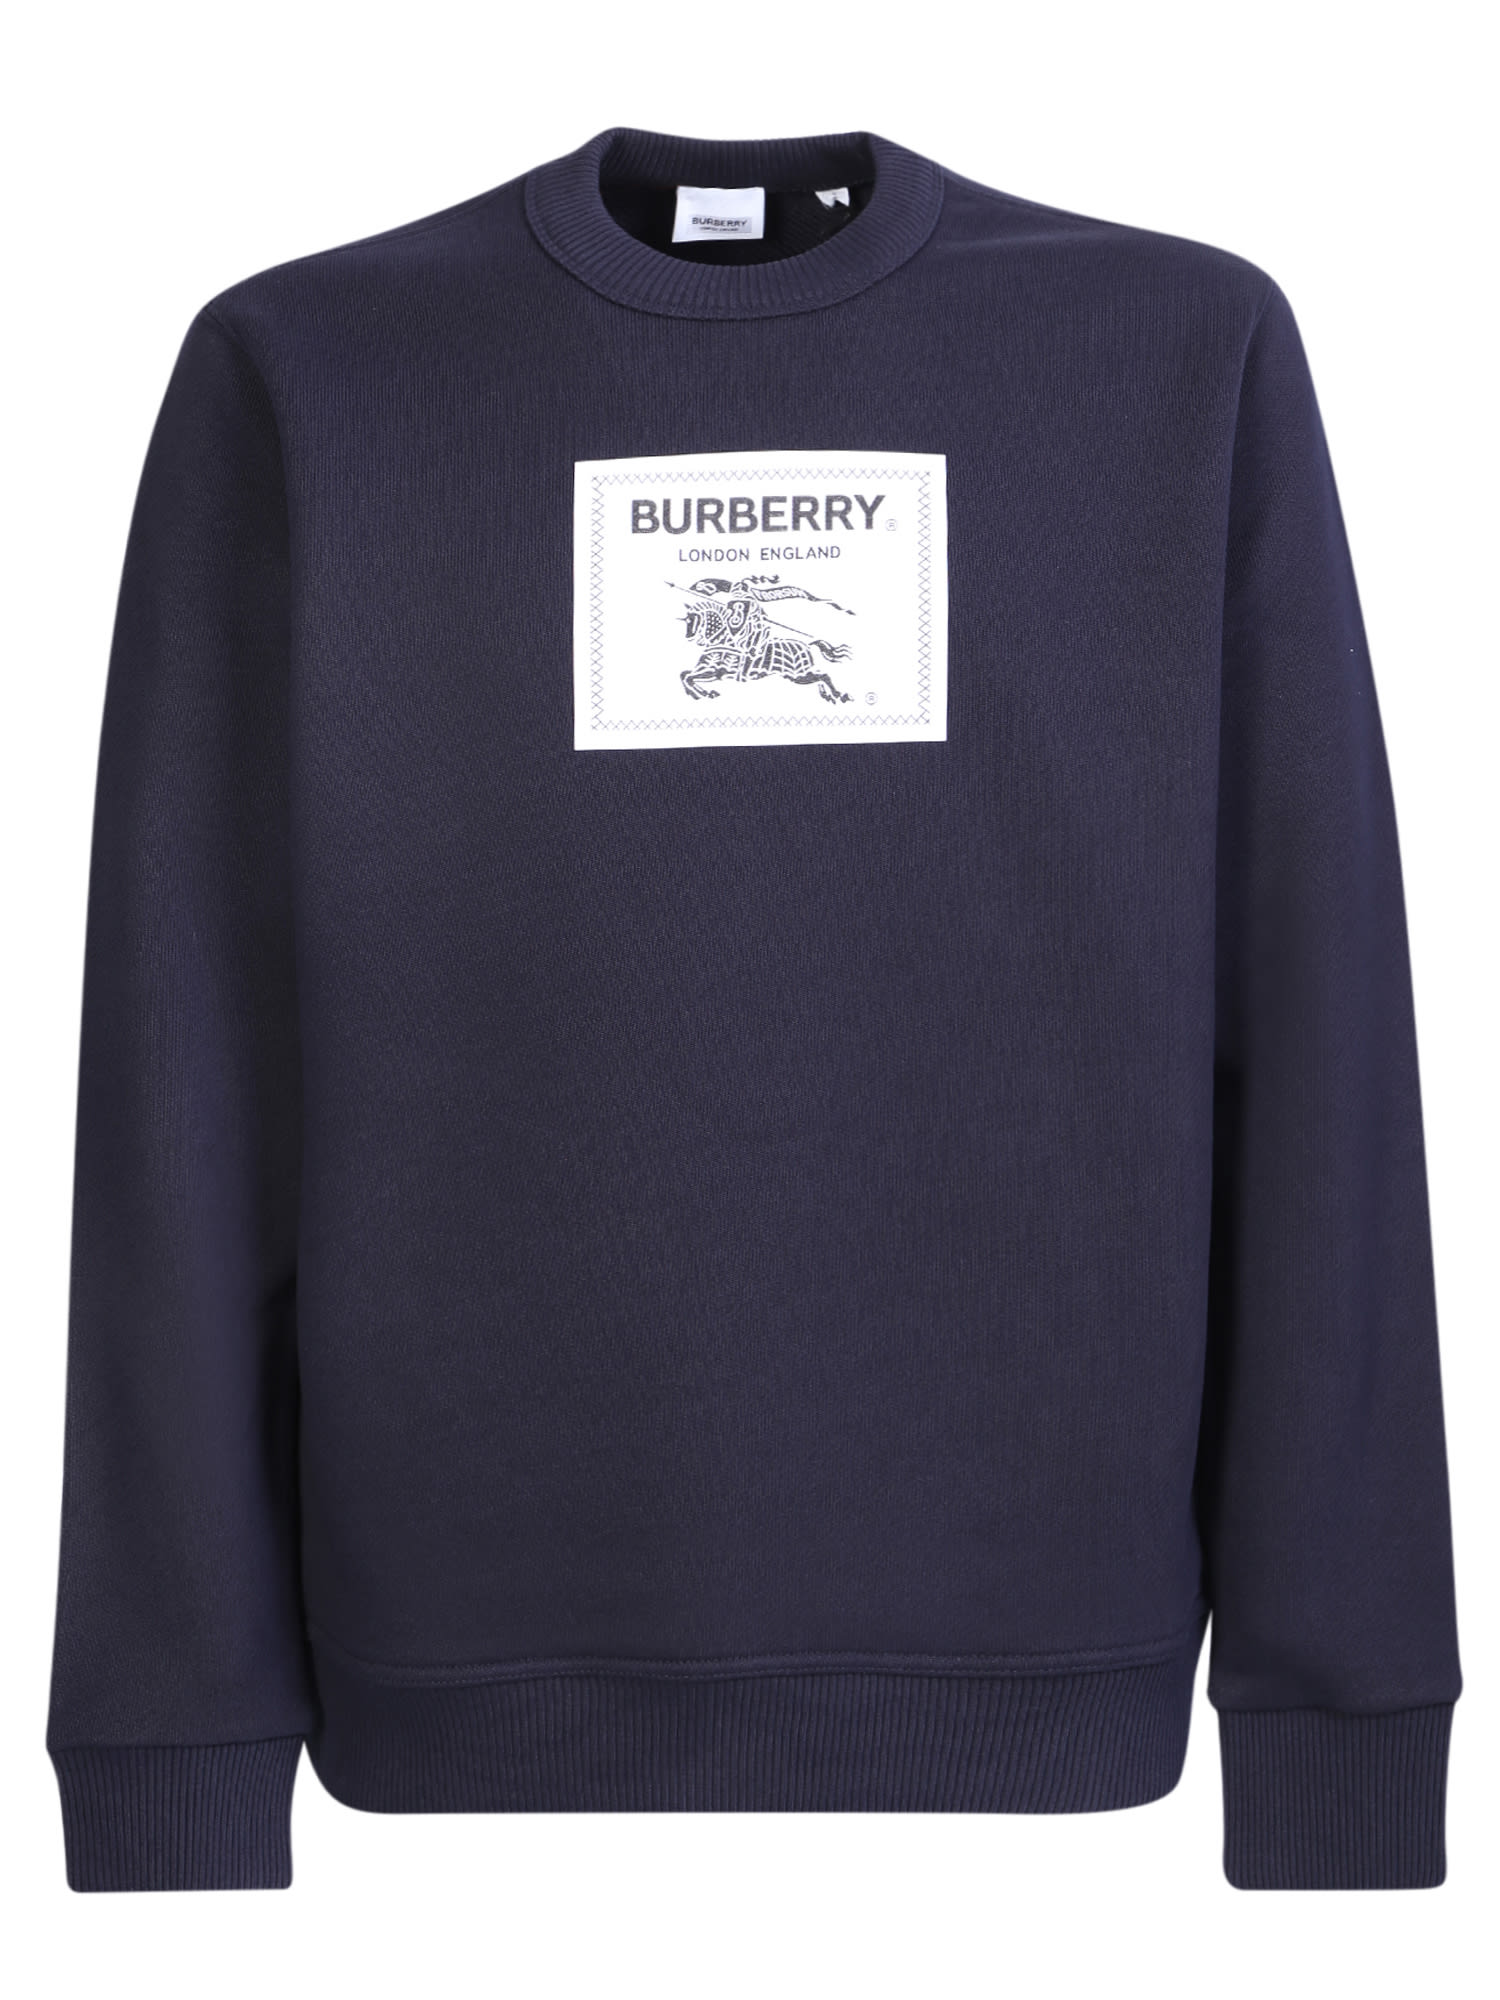 Burberry Prorsum Label Blue Sweatshirt